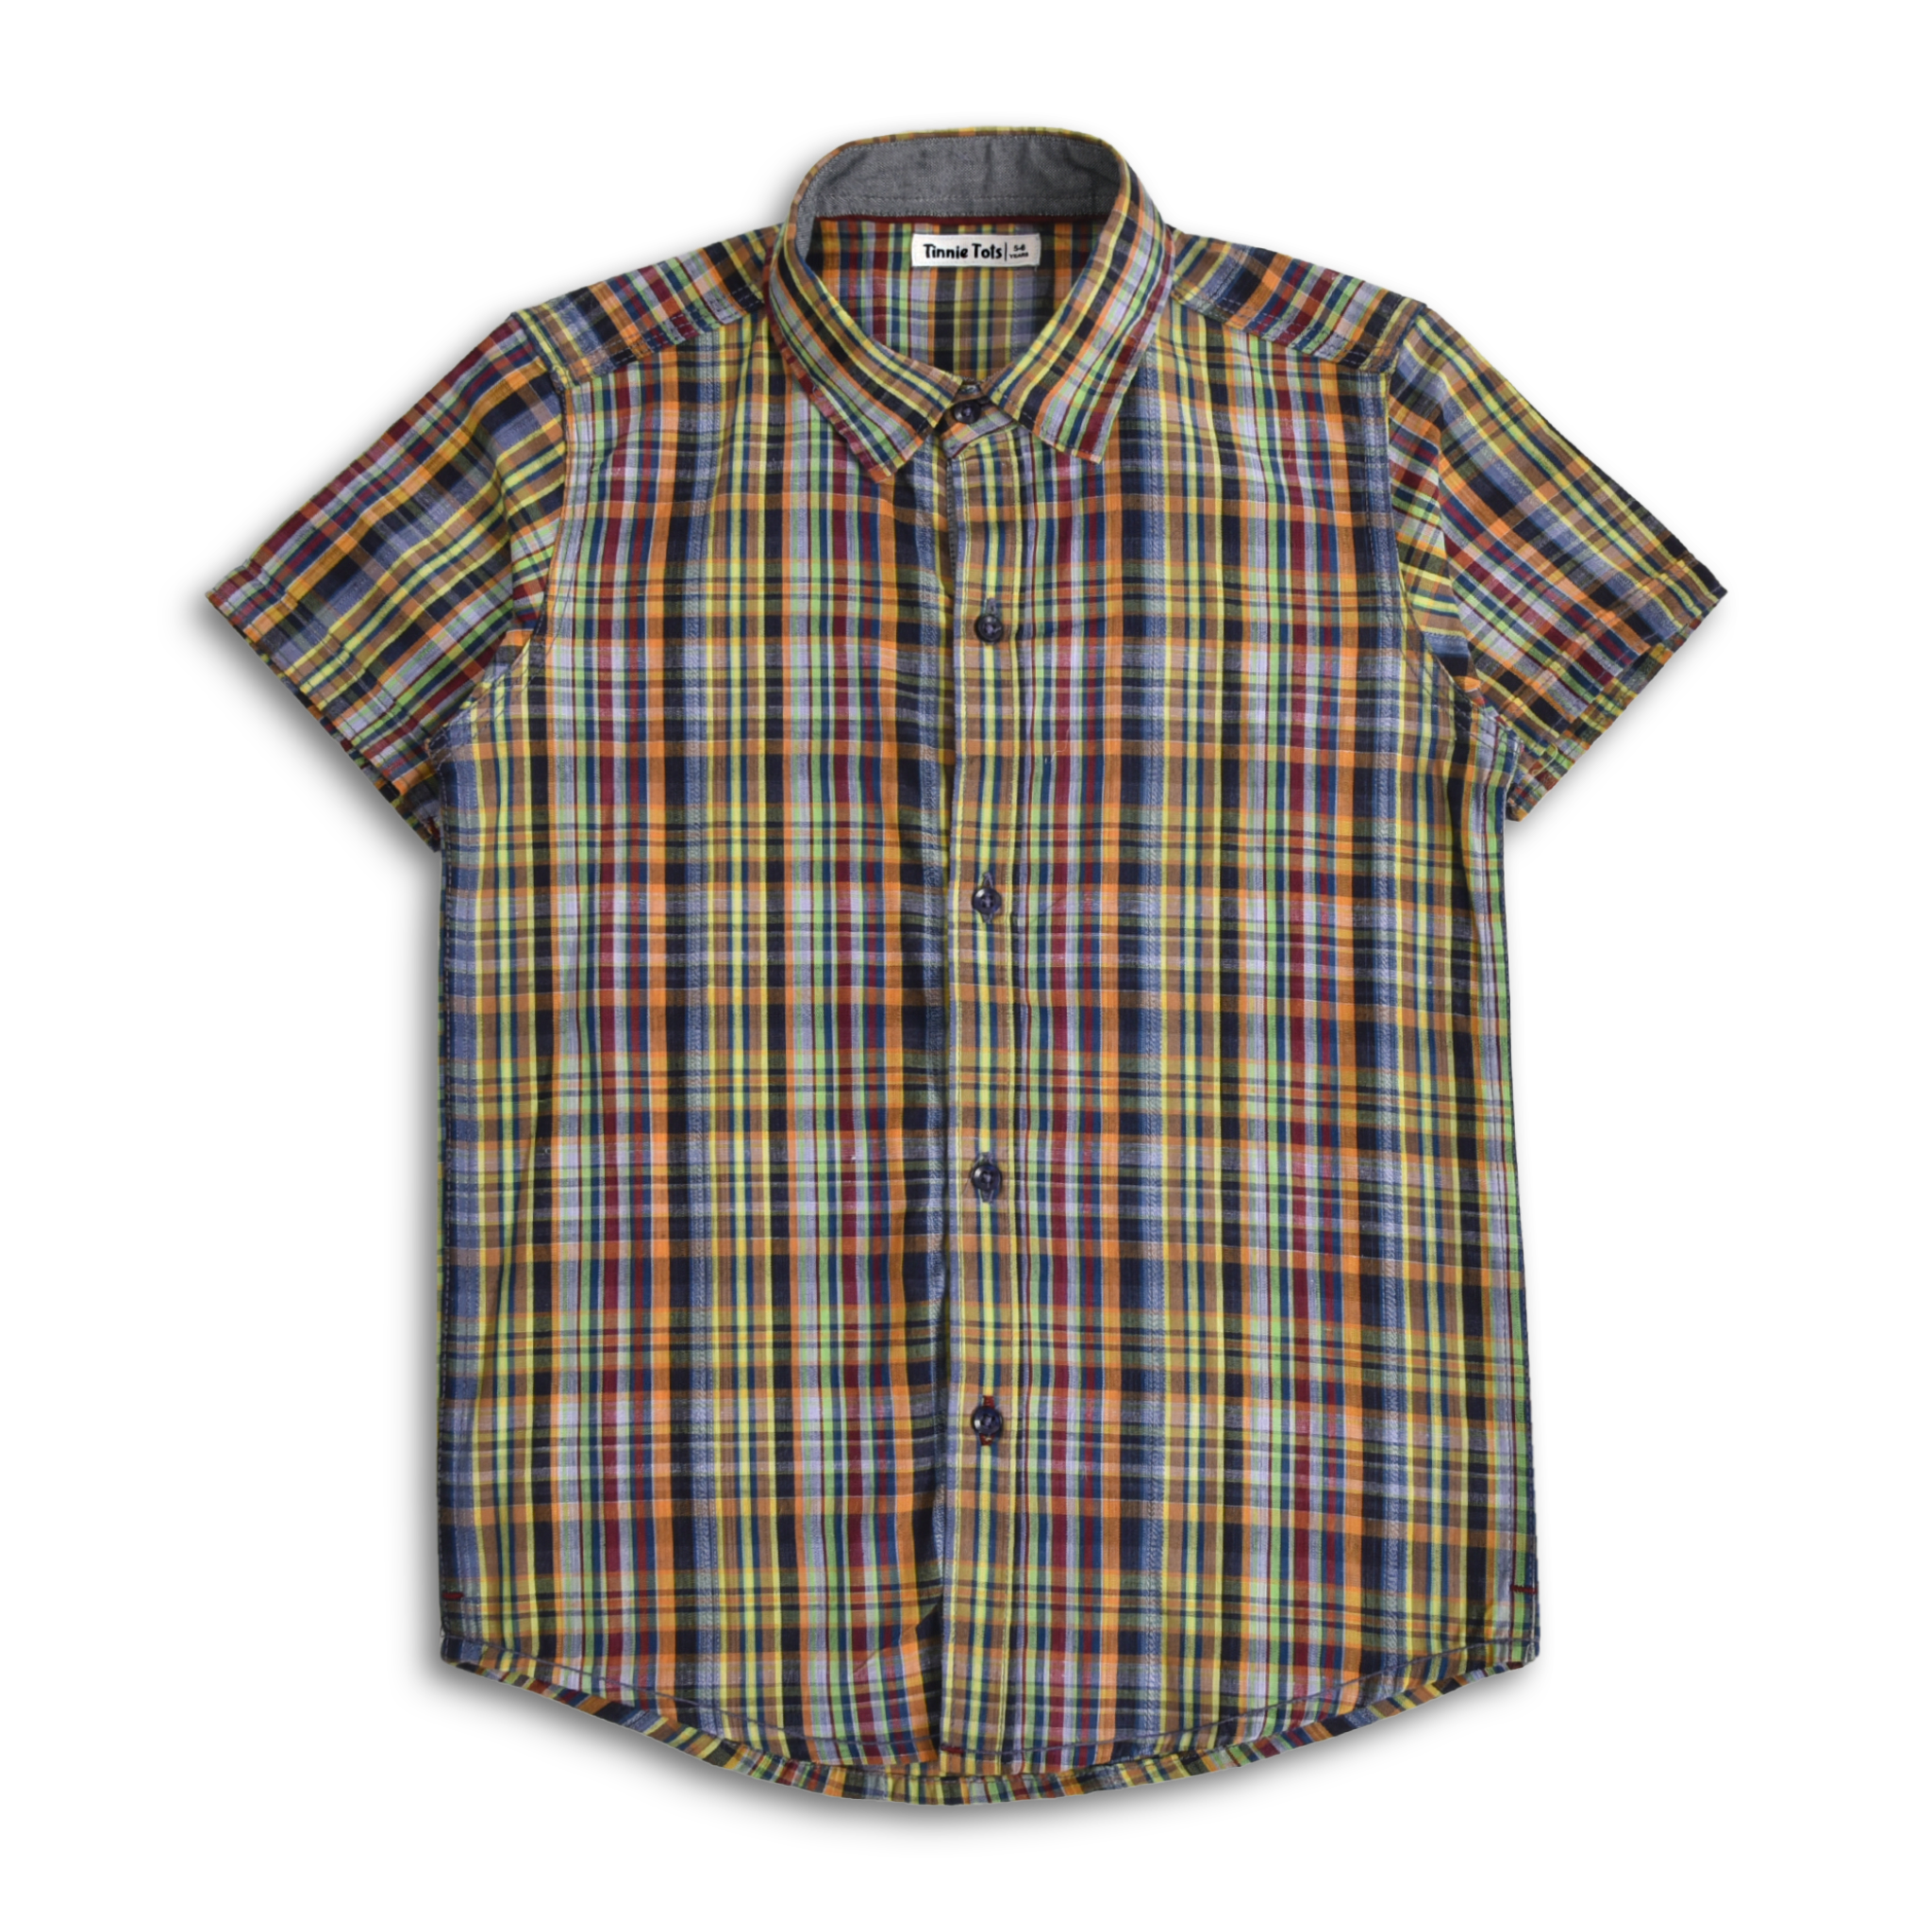 Multi-Colored Casual Shirt